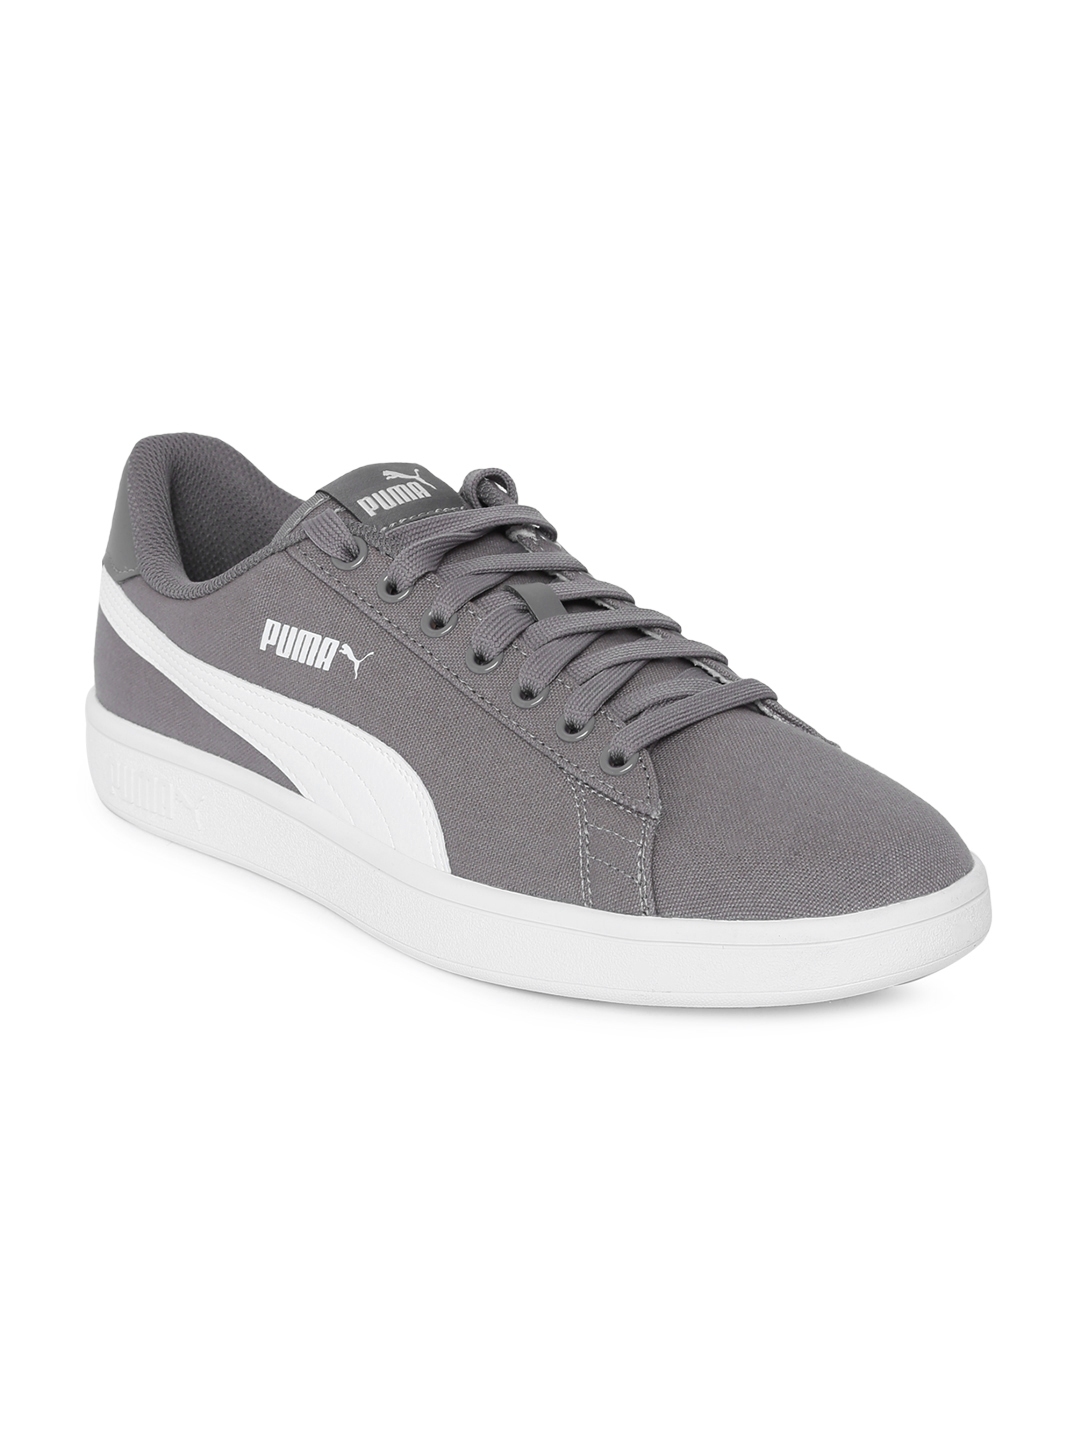 puma grey casual shoes